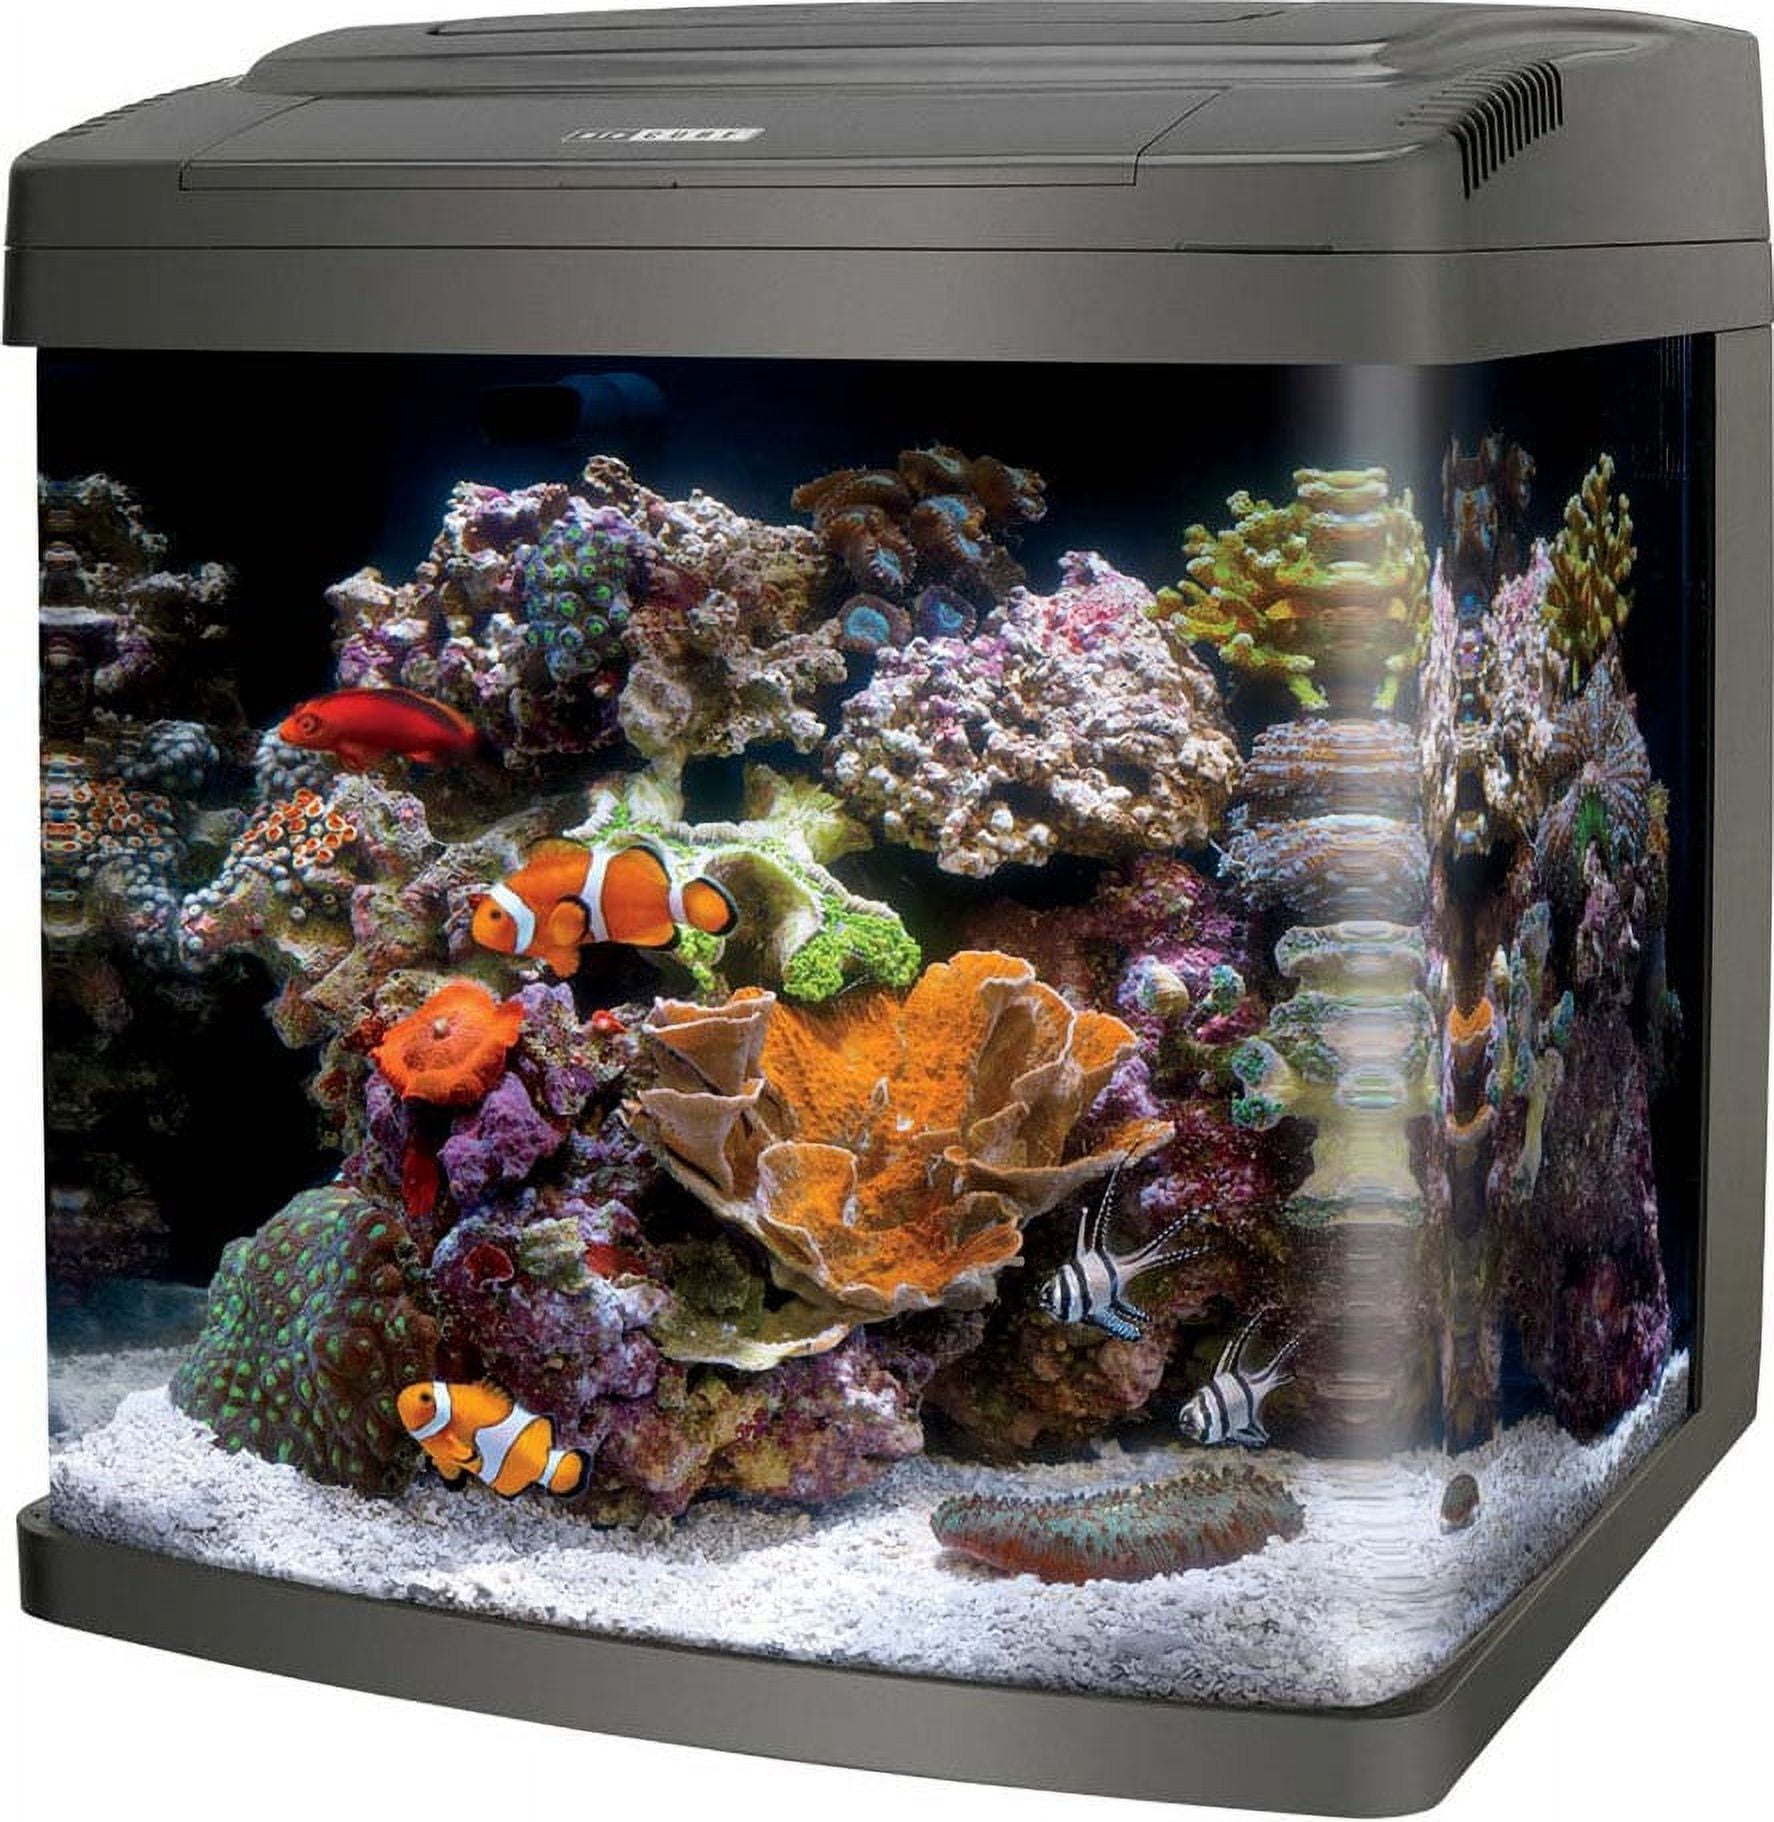 GloFish 2.5 Gallon Corner Aquarium Kit, Includes LED Lighting and  Filtration Perfect for GloFish Betta Fish Tank 